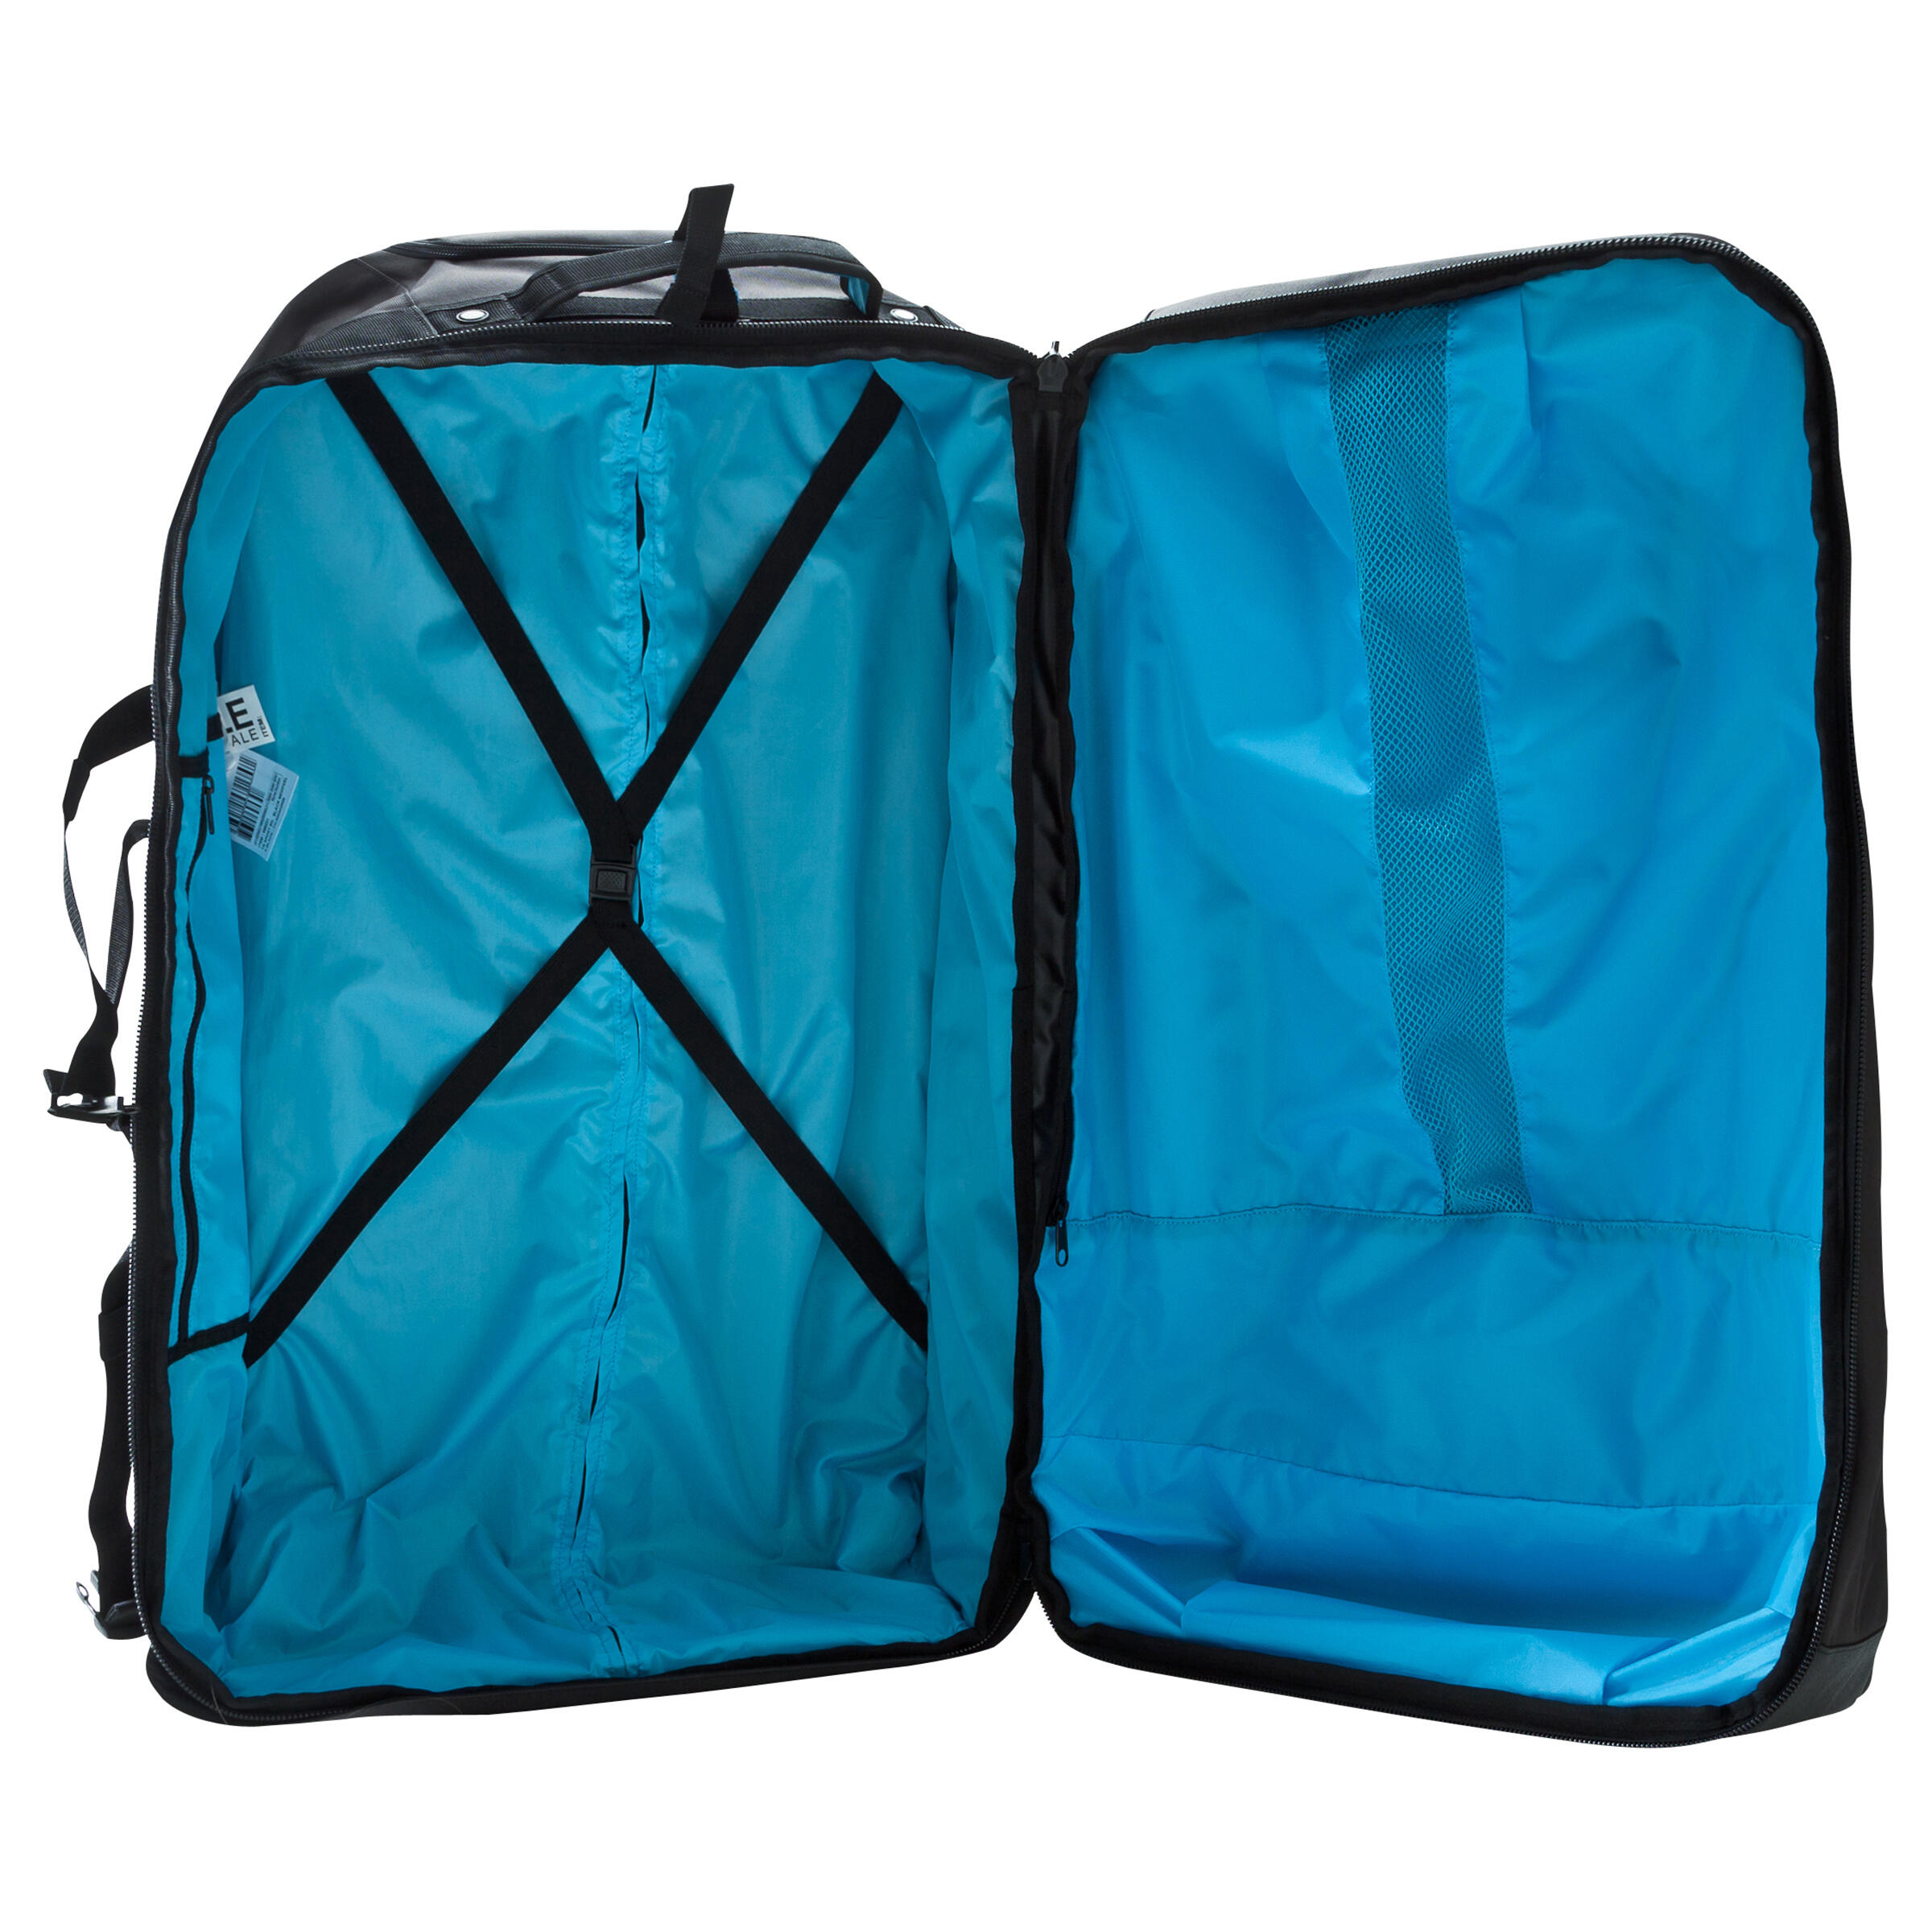 Sport 90L wheeled suitcase/backpack - black/blue 14/15